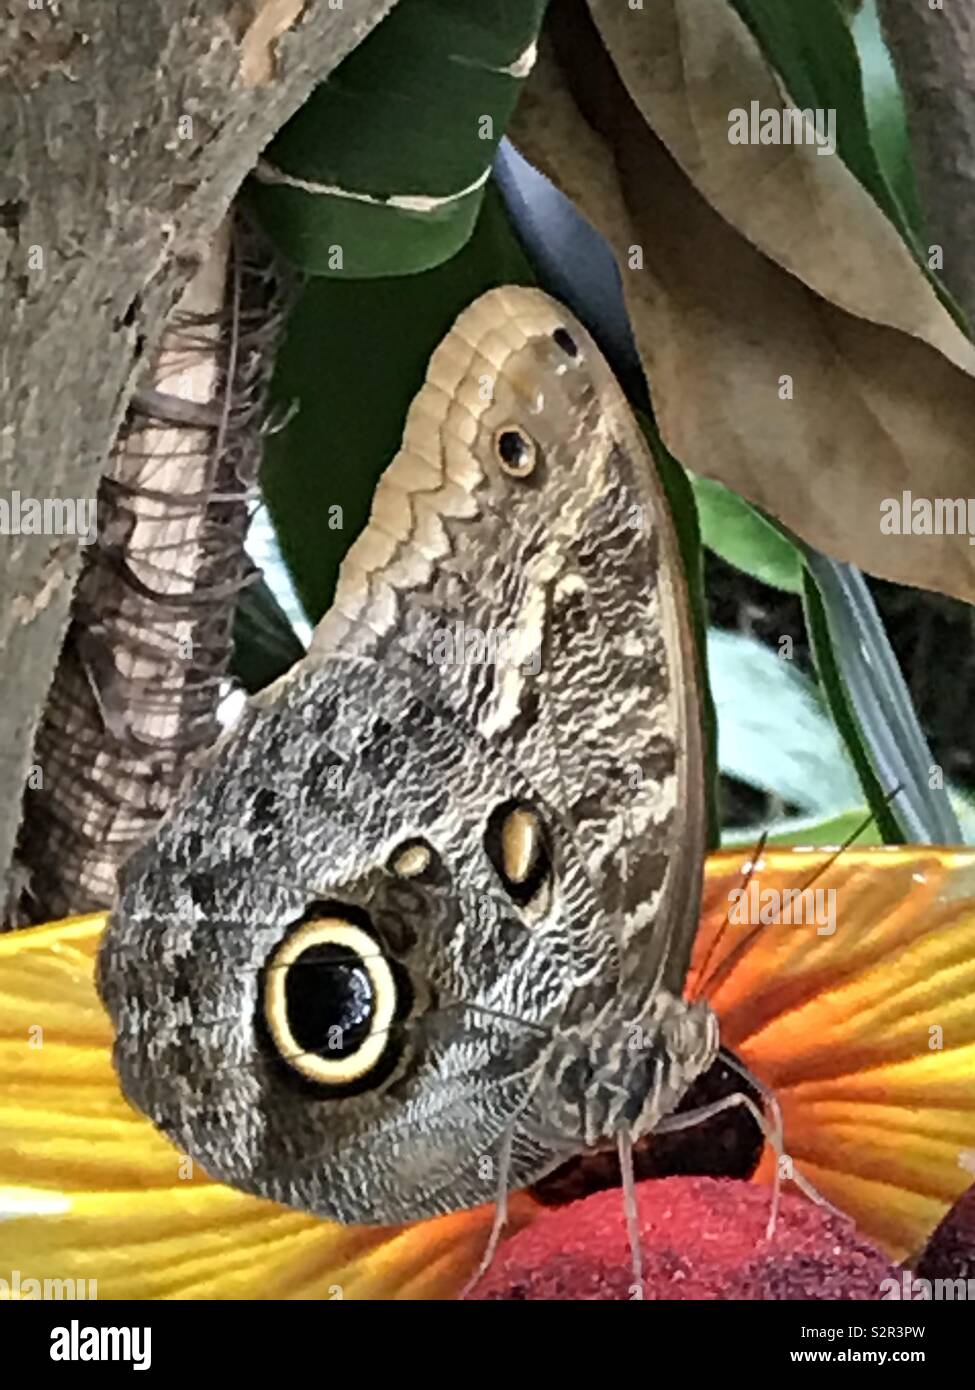 A large Owl Eye moth sitting on a leaf Stock Photo